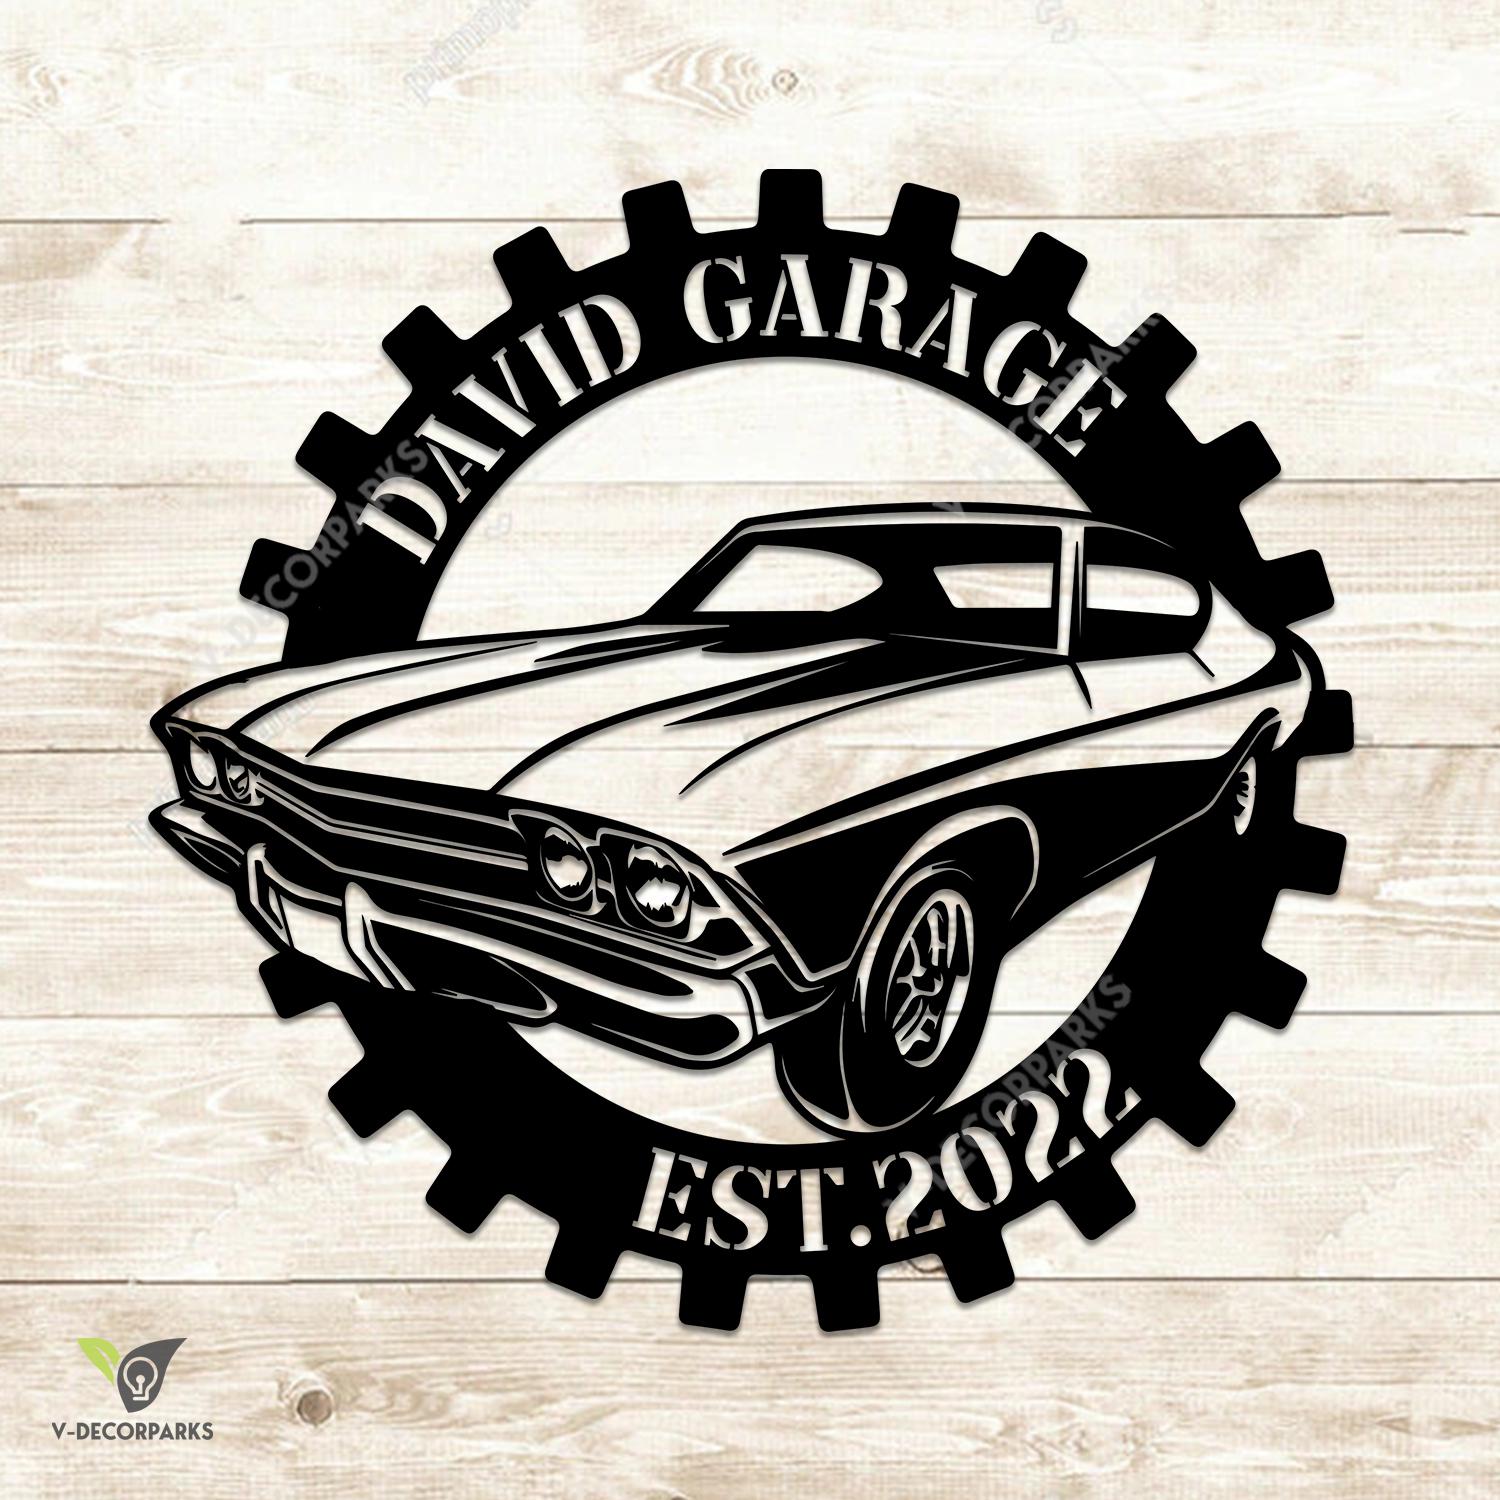 Personalized American Muscle Car Garage Metal Sign, Muscle Car Gear Iron Plaque Metal Sign